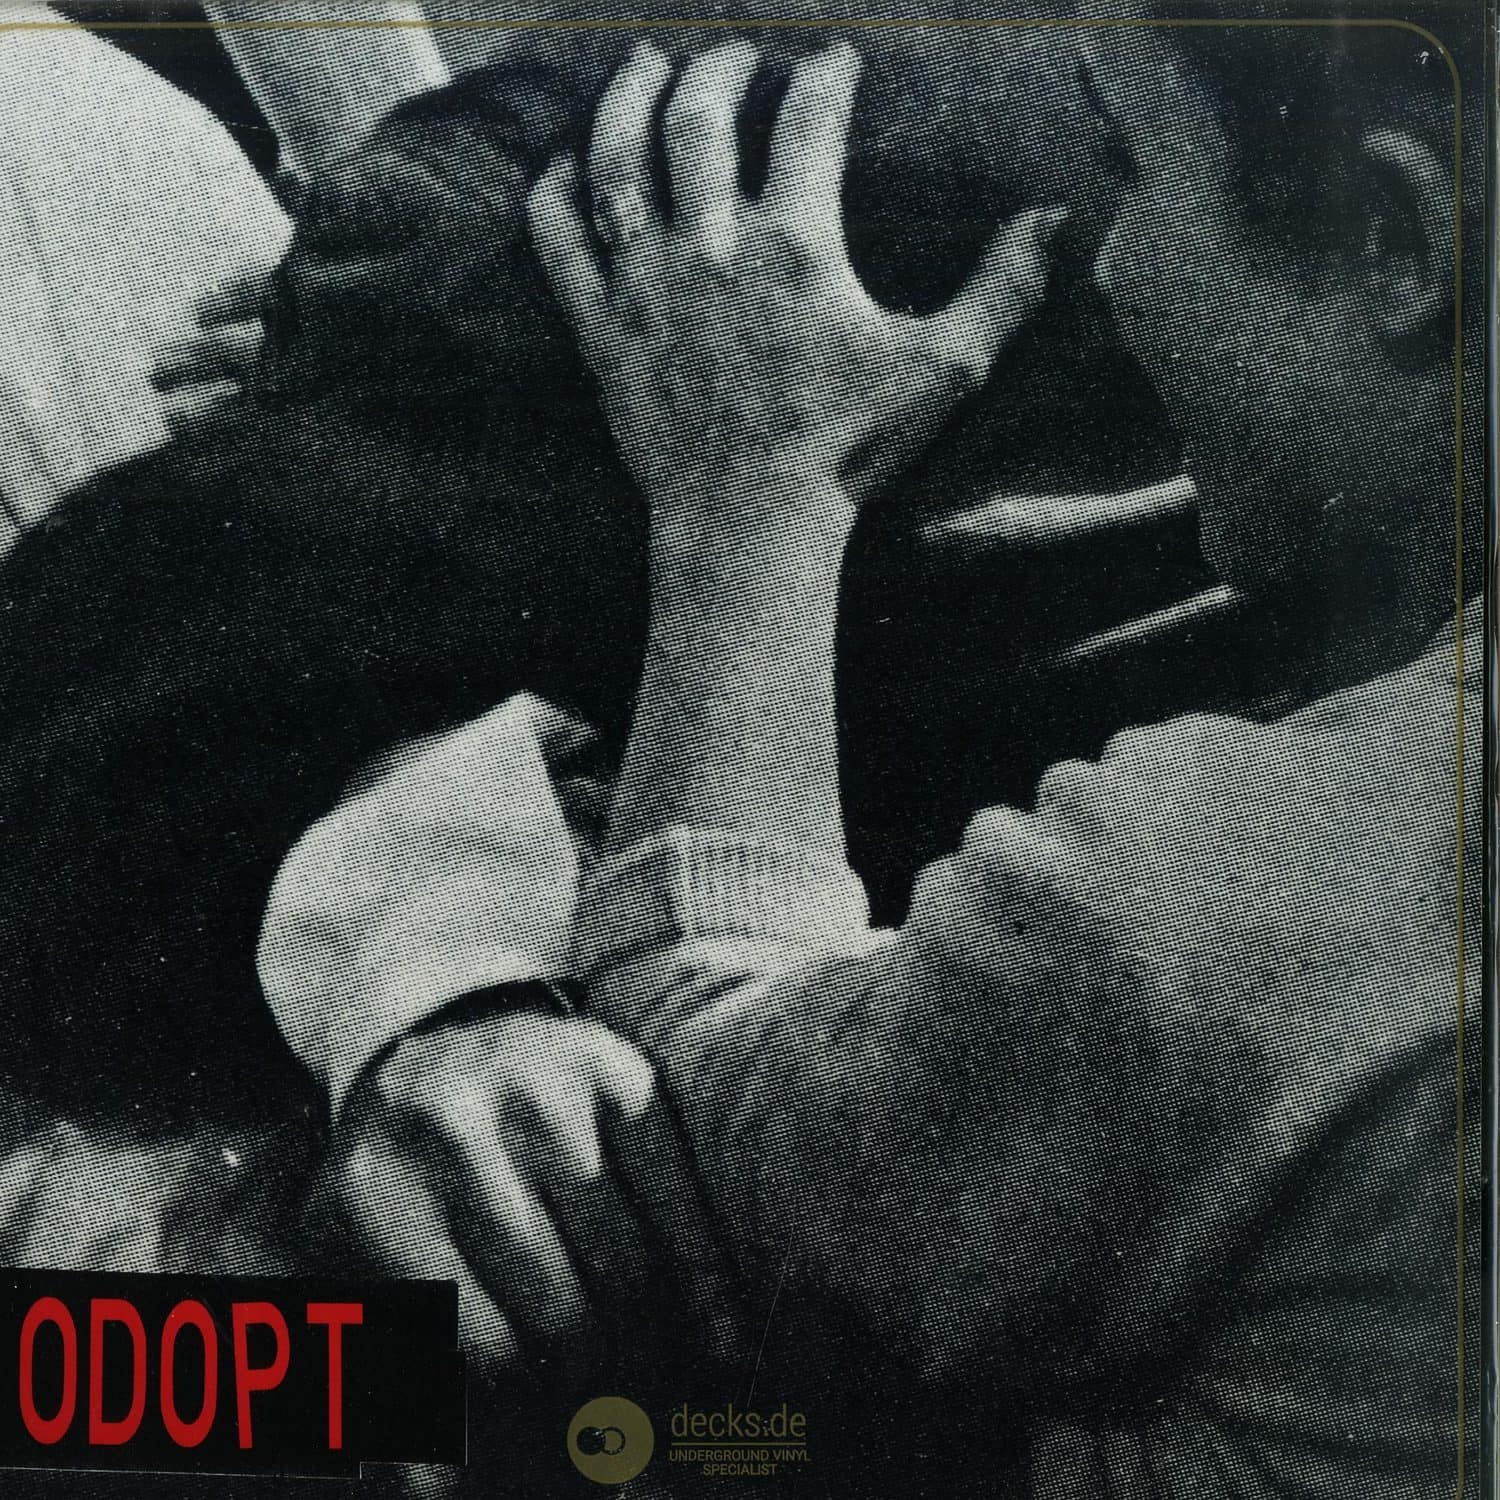 Odopt - SOCIOPATH EP